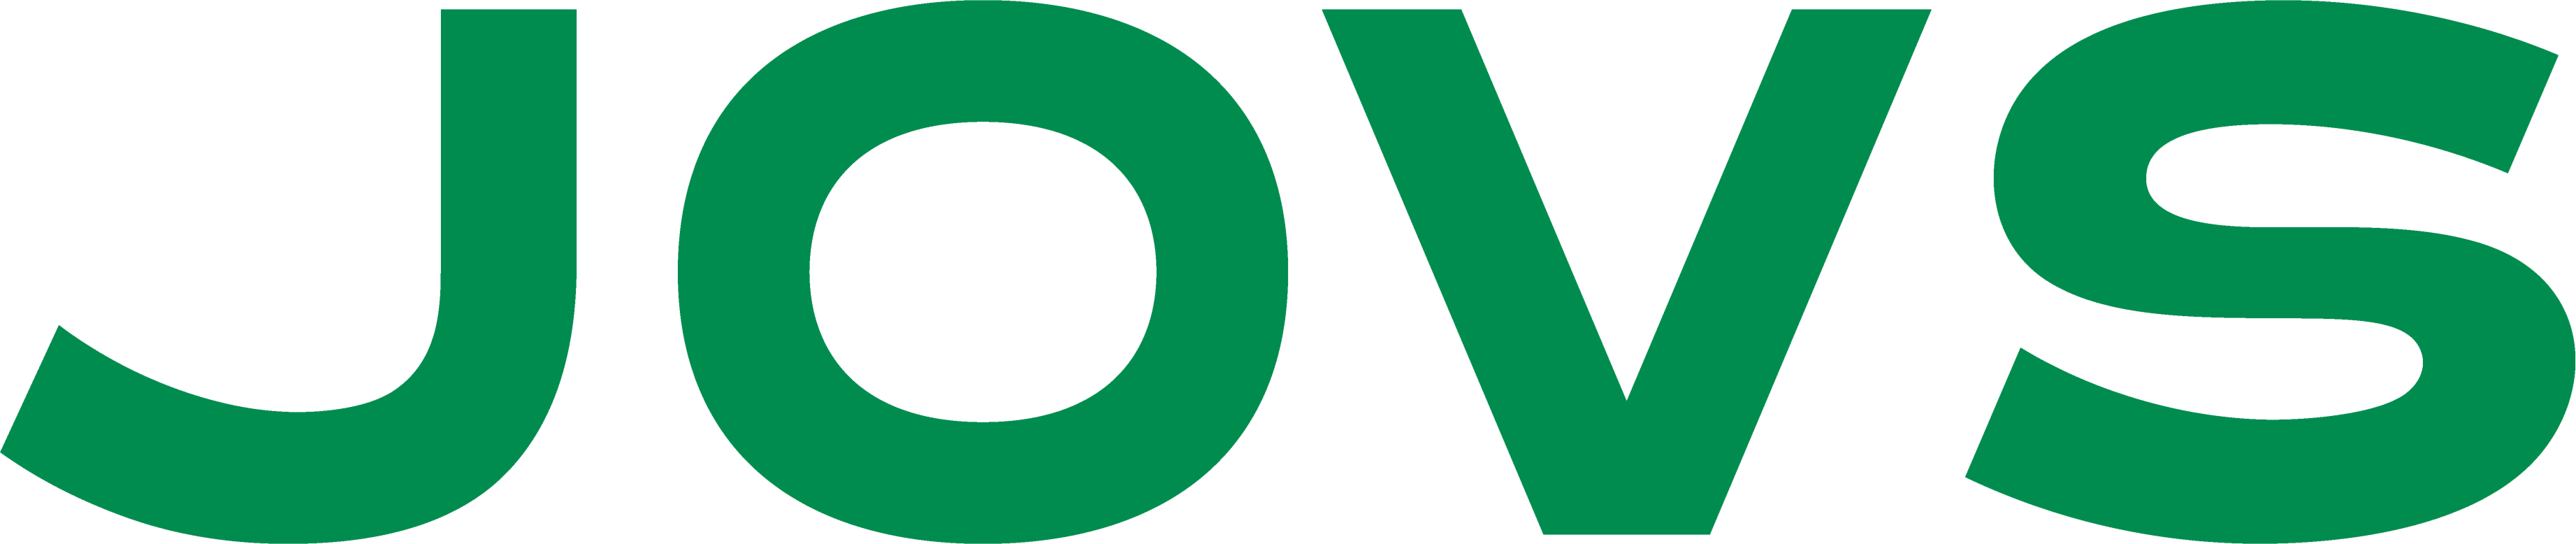 Official JOVS logo, representing innovative beauty technology.